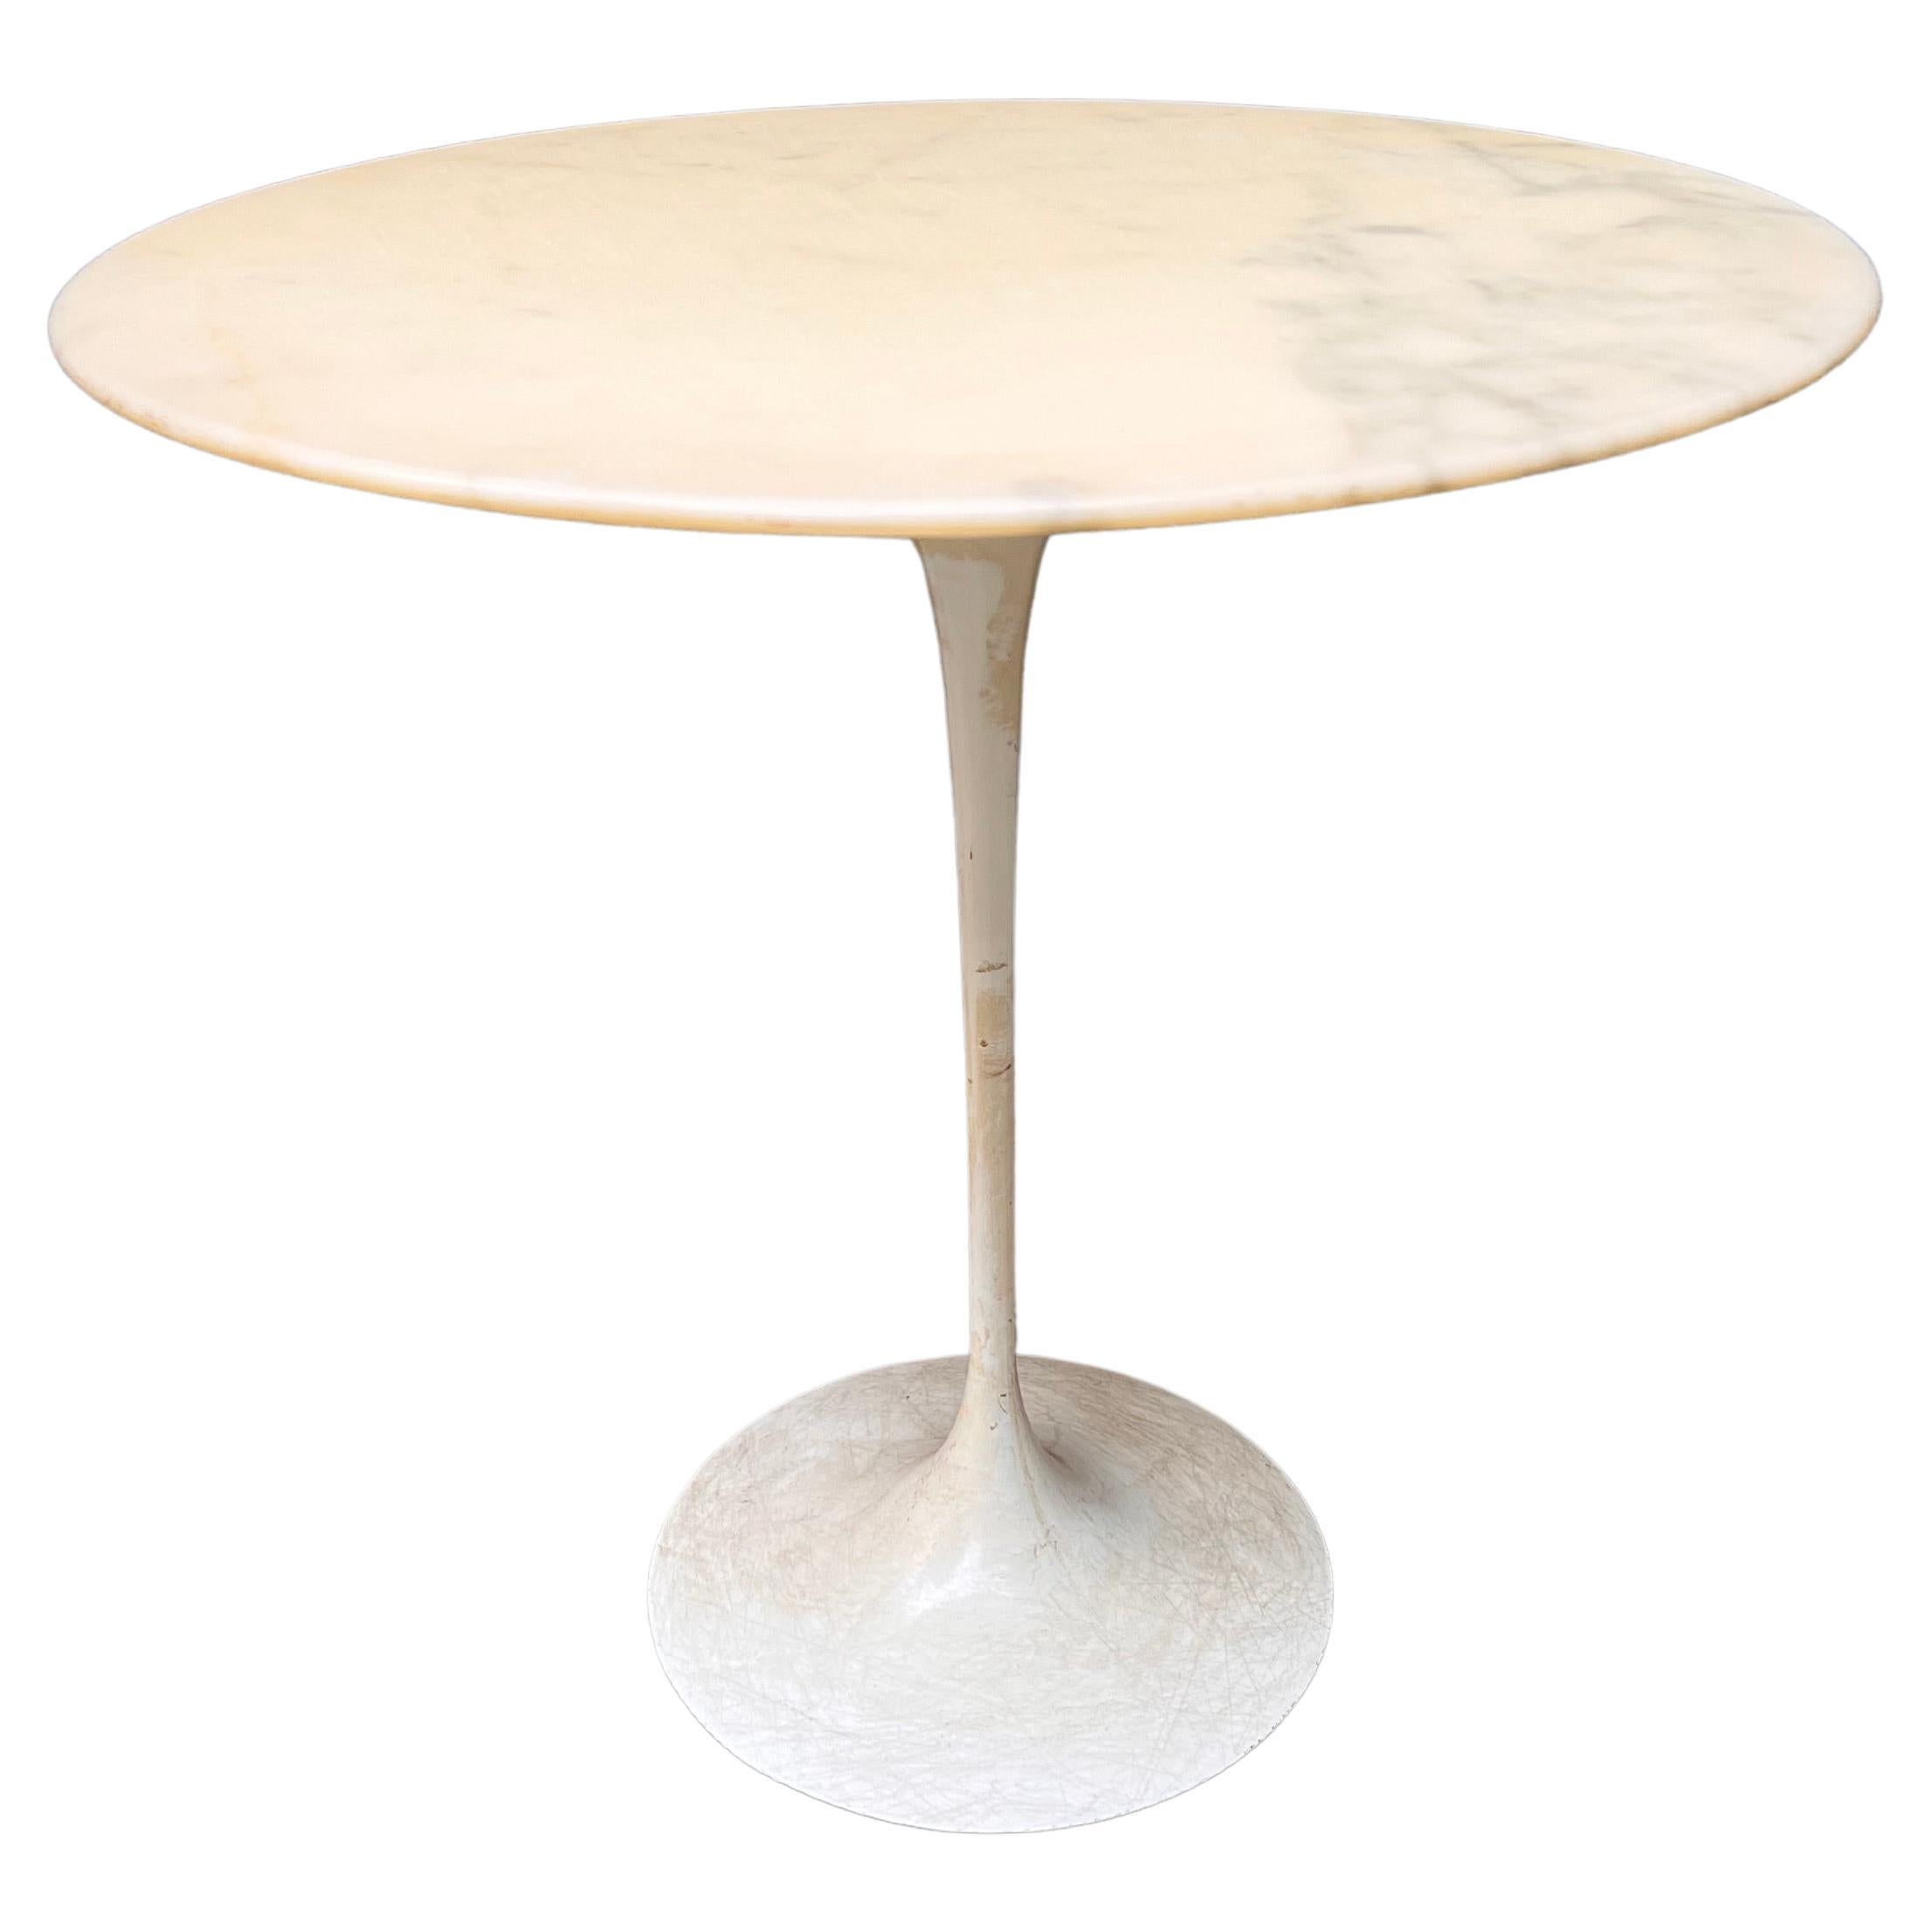 Tavolino Tulip di Eero Saarinen per Knoll - Marmo Bianco Carrara - Anni '60